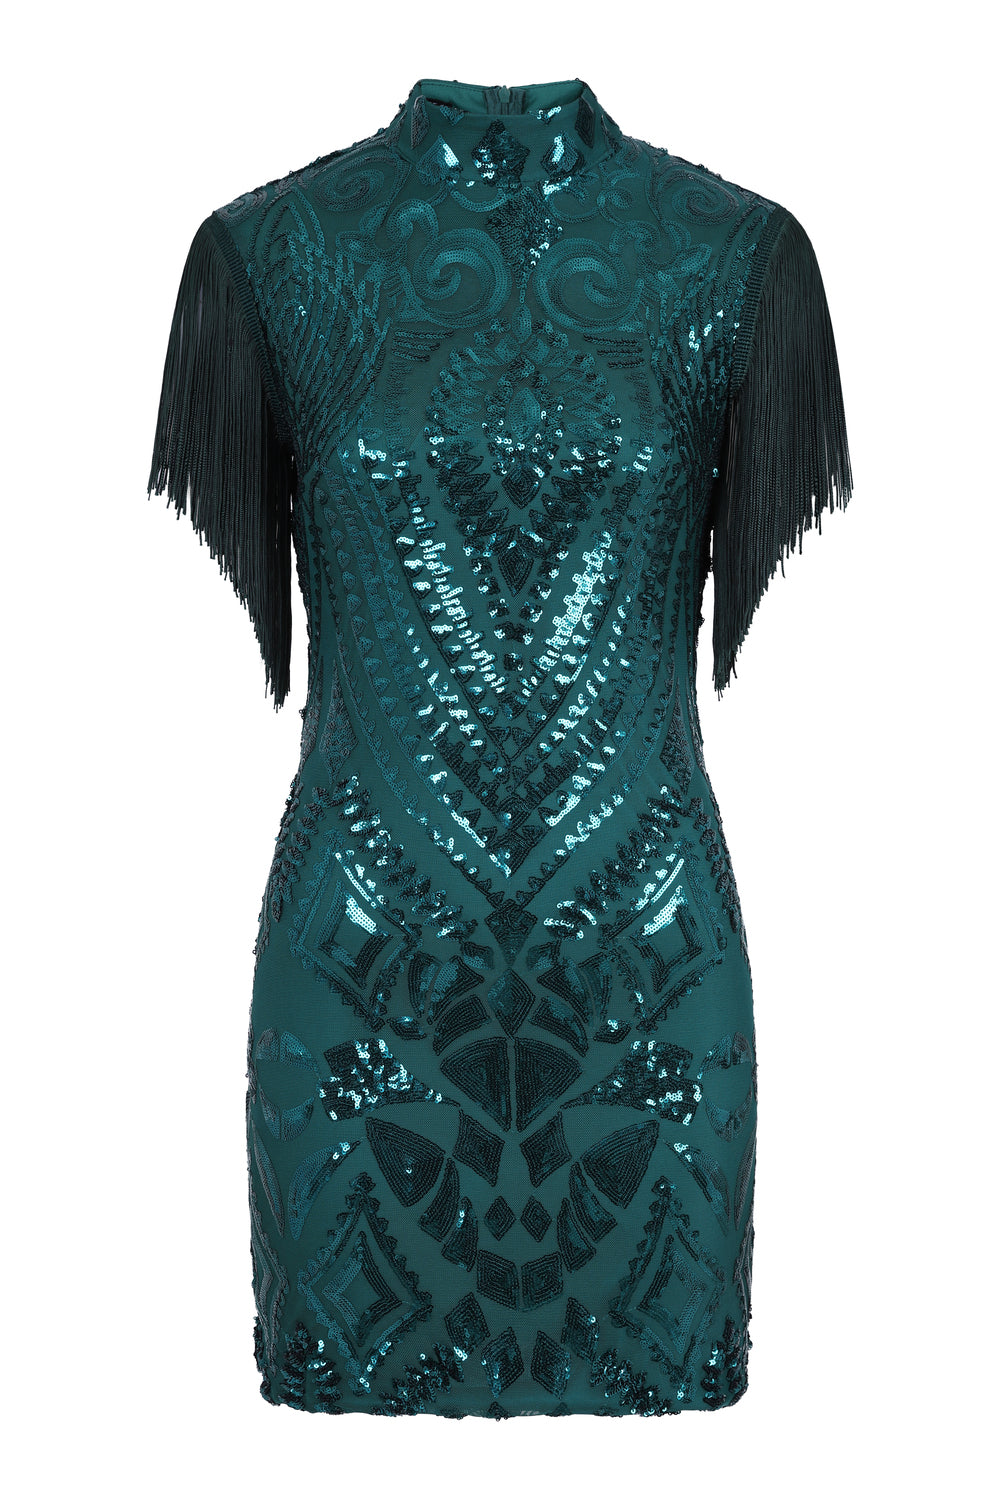 Kylie Vip Green Luxe Tassel Fringe Sequin Embellished Illusion Dress